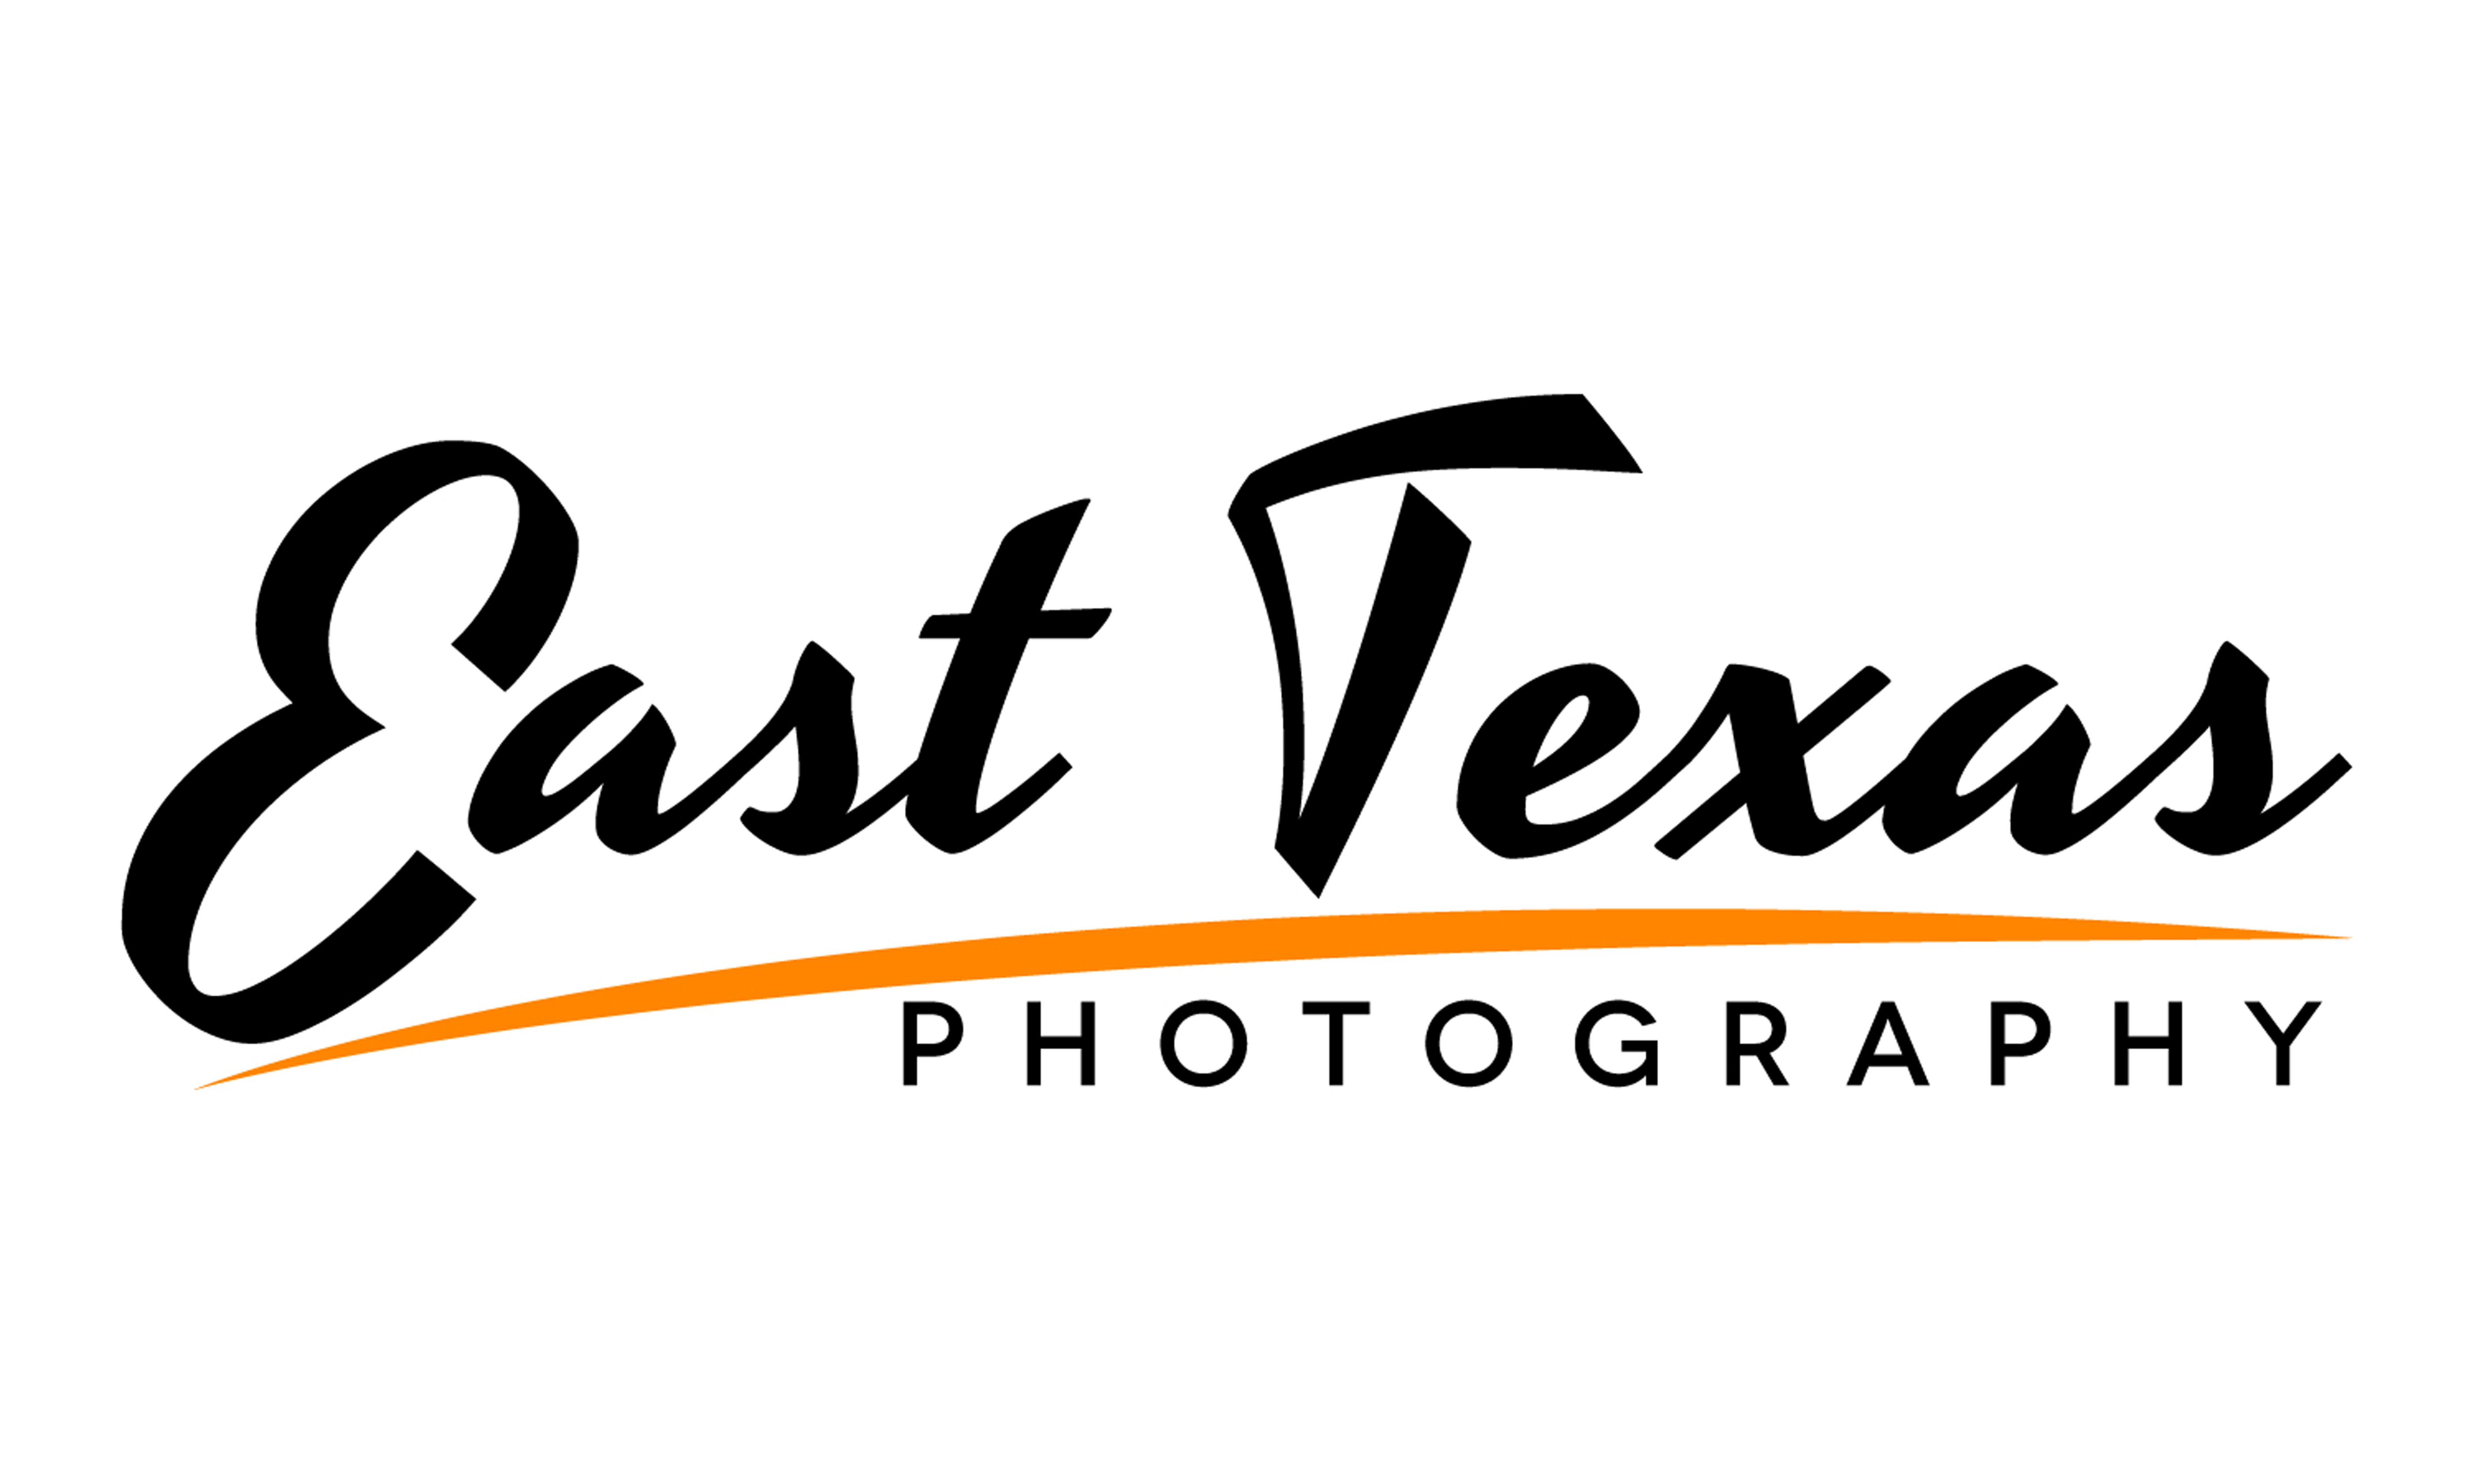 East Texas Photography